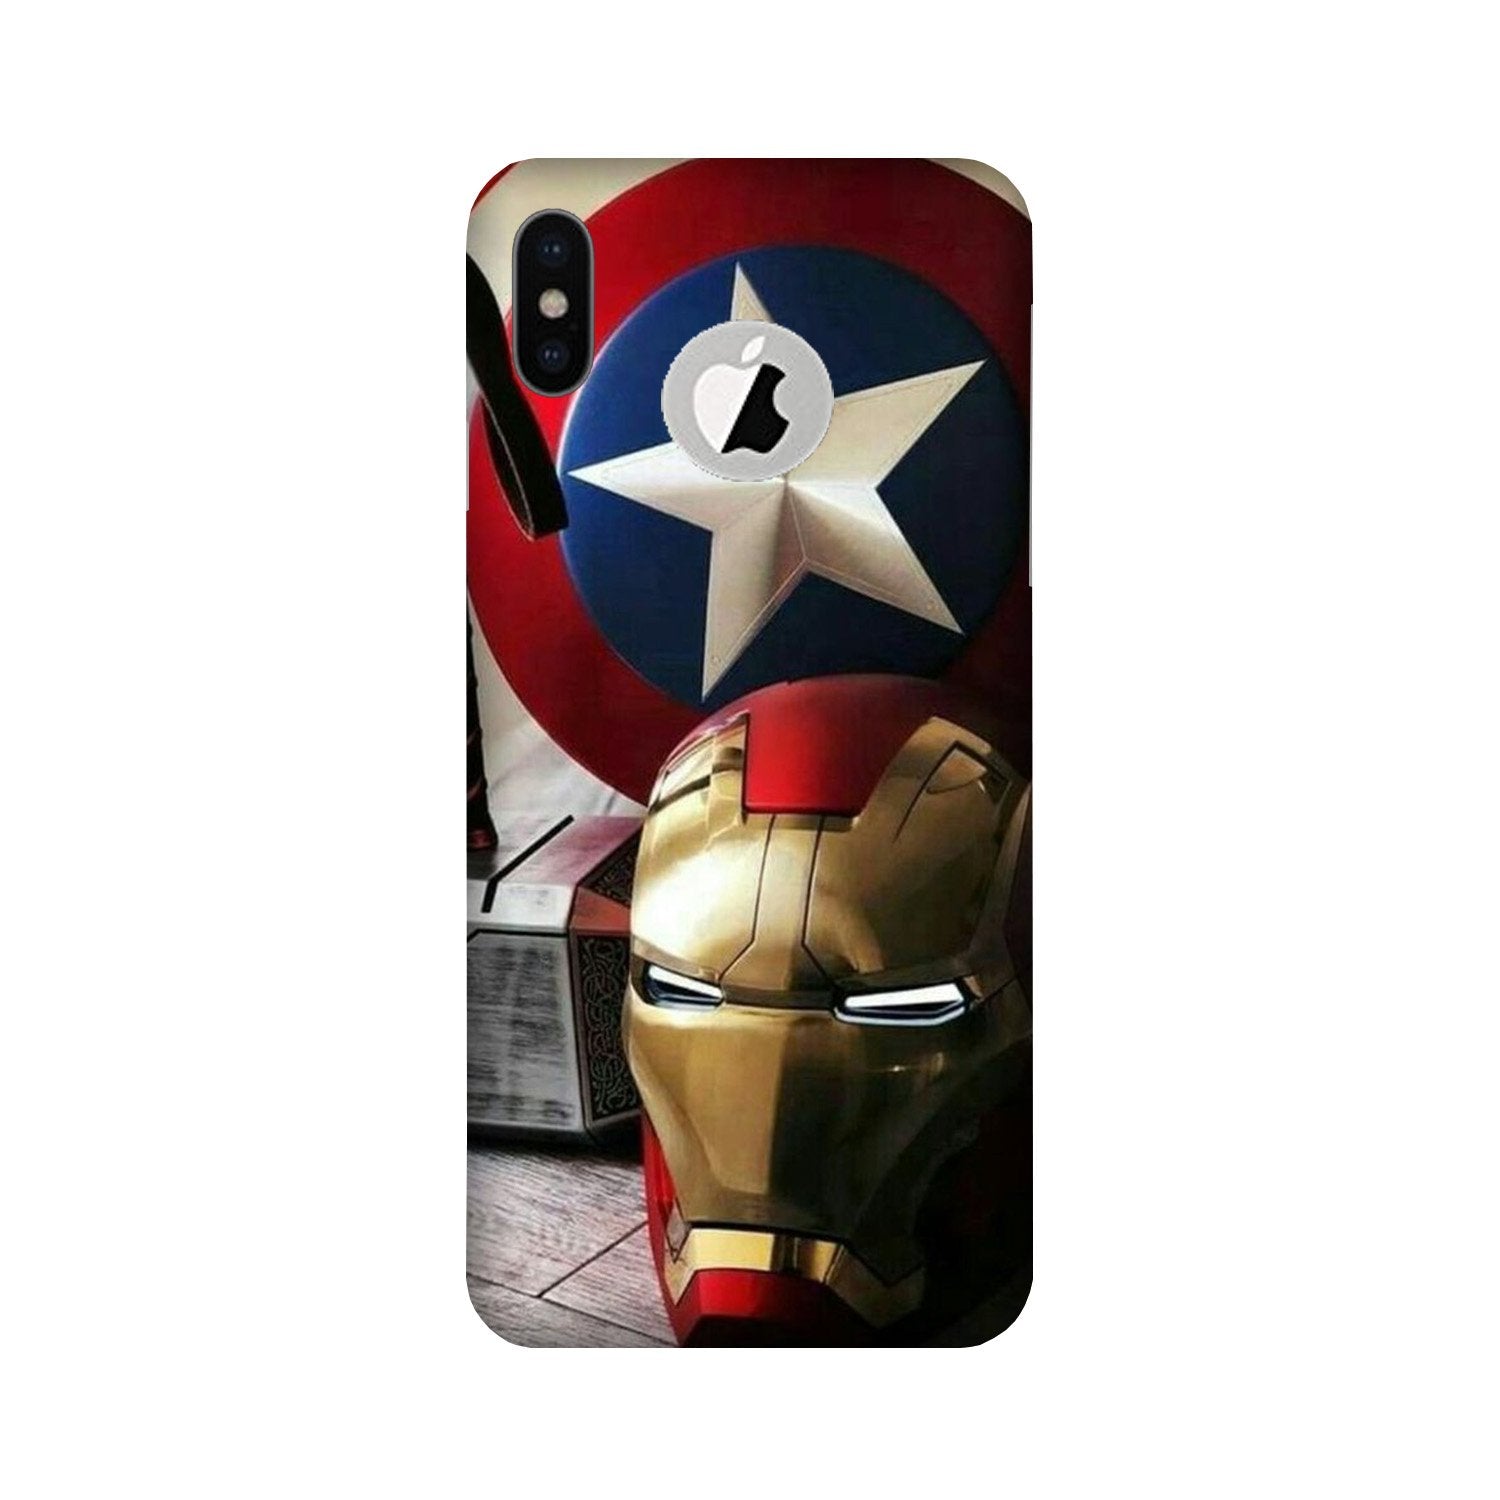 Ironman Captain America Case for iPhone X logo cut (Design No. 254)